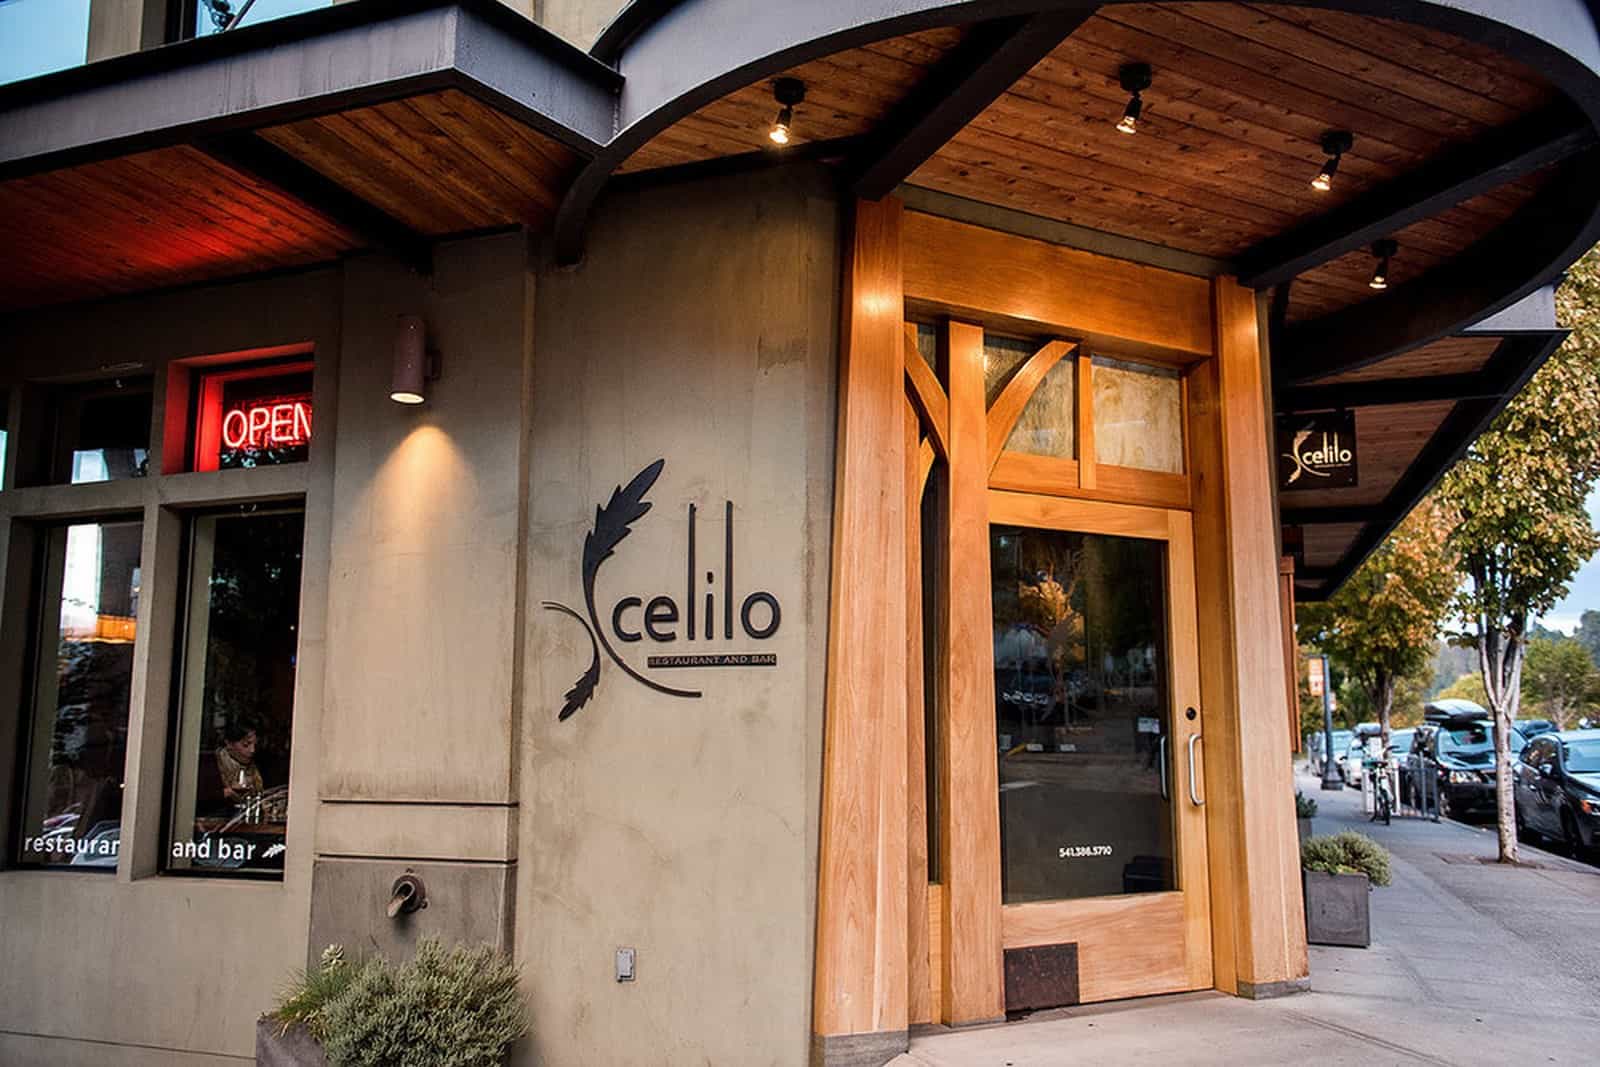 Celilo Restaurant